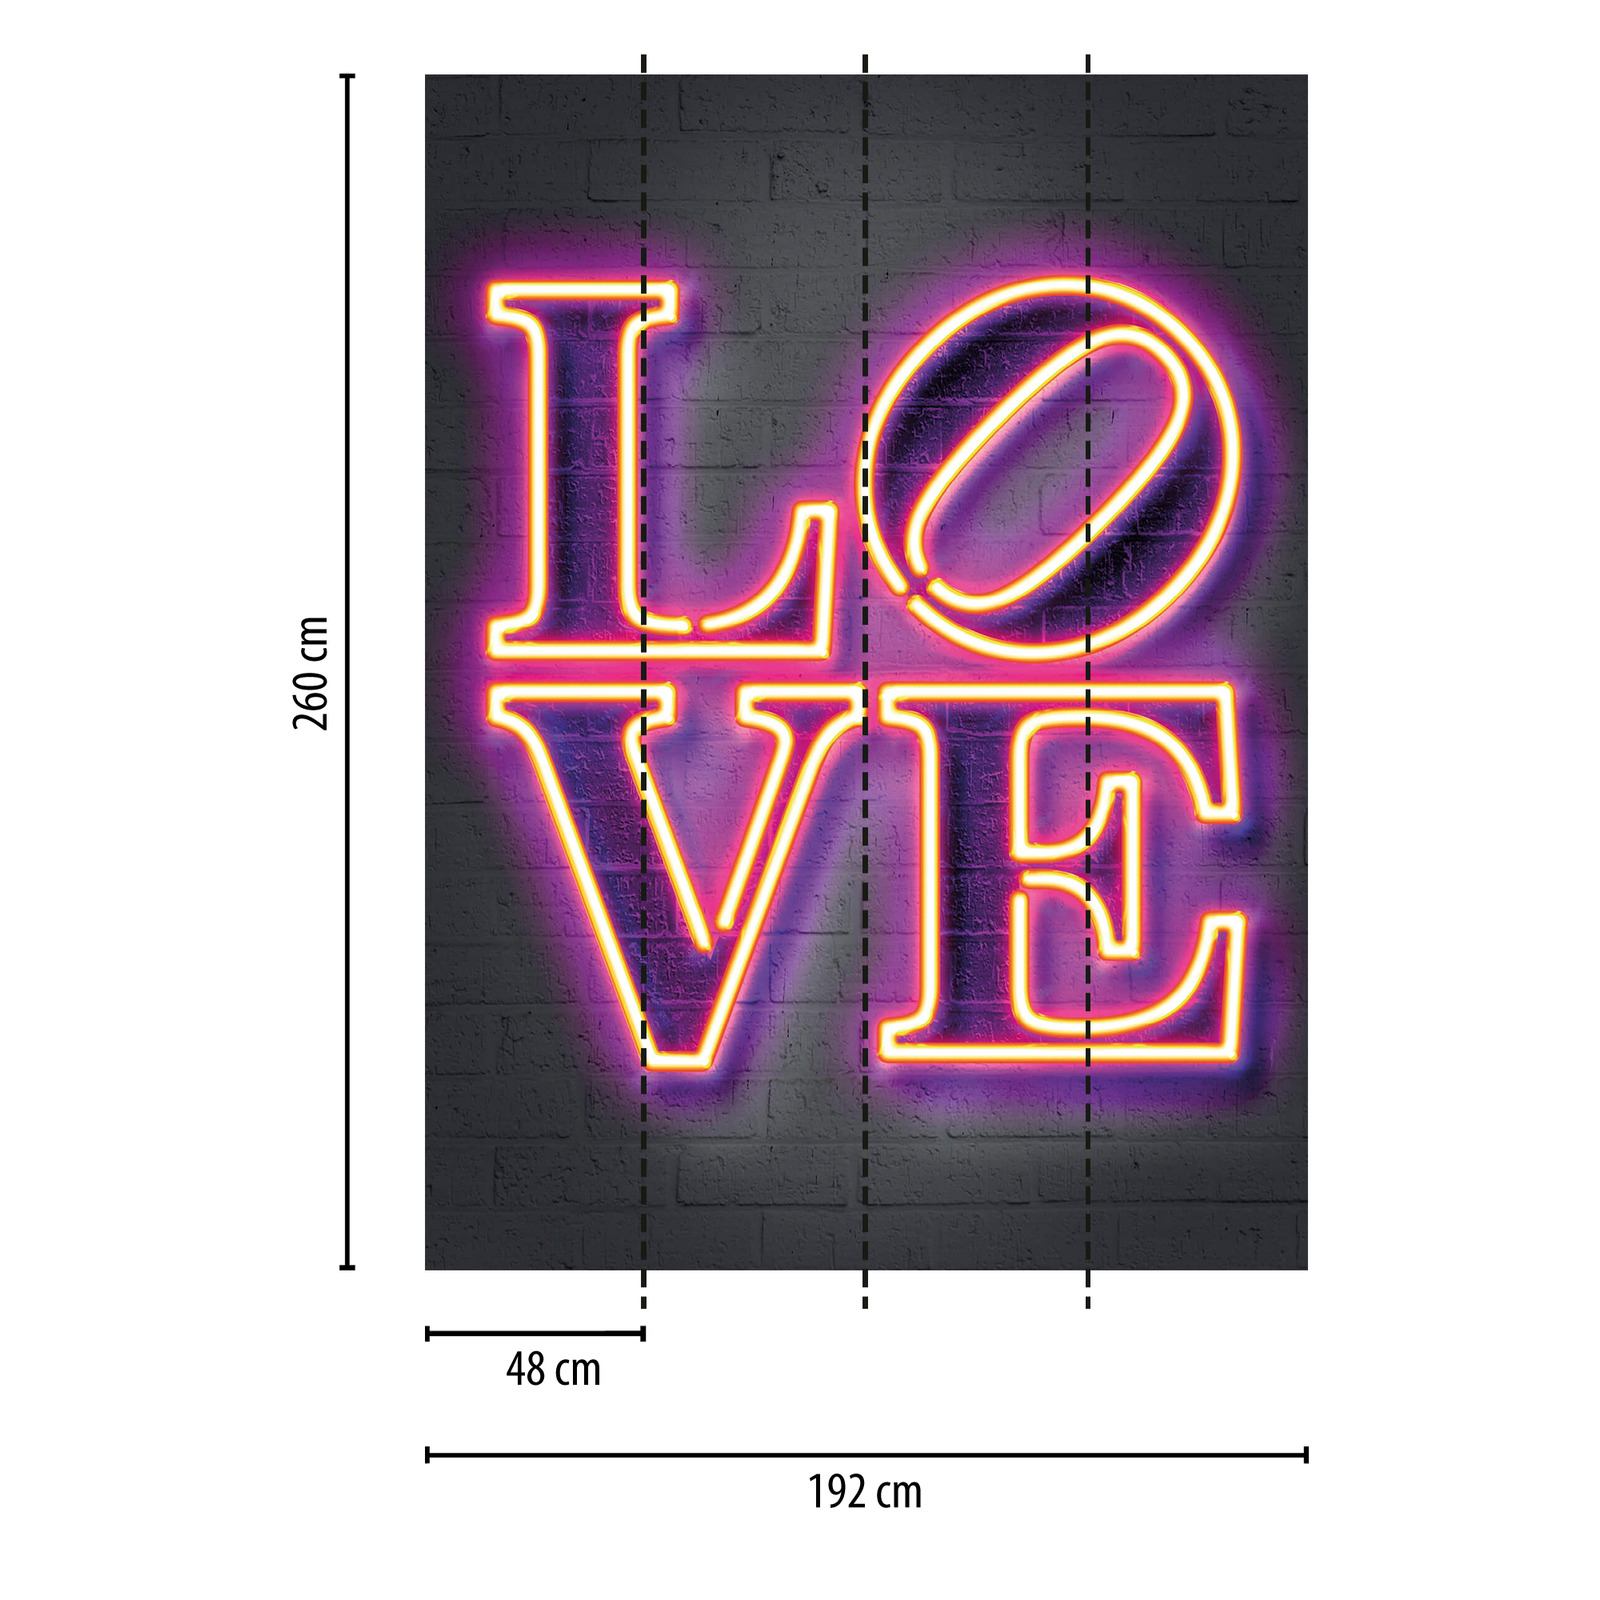             Photo wallpaper narrow illuminated letters LOVE
        